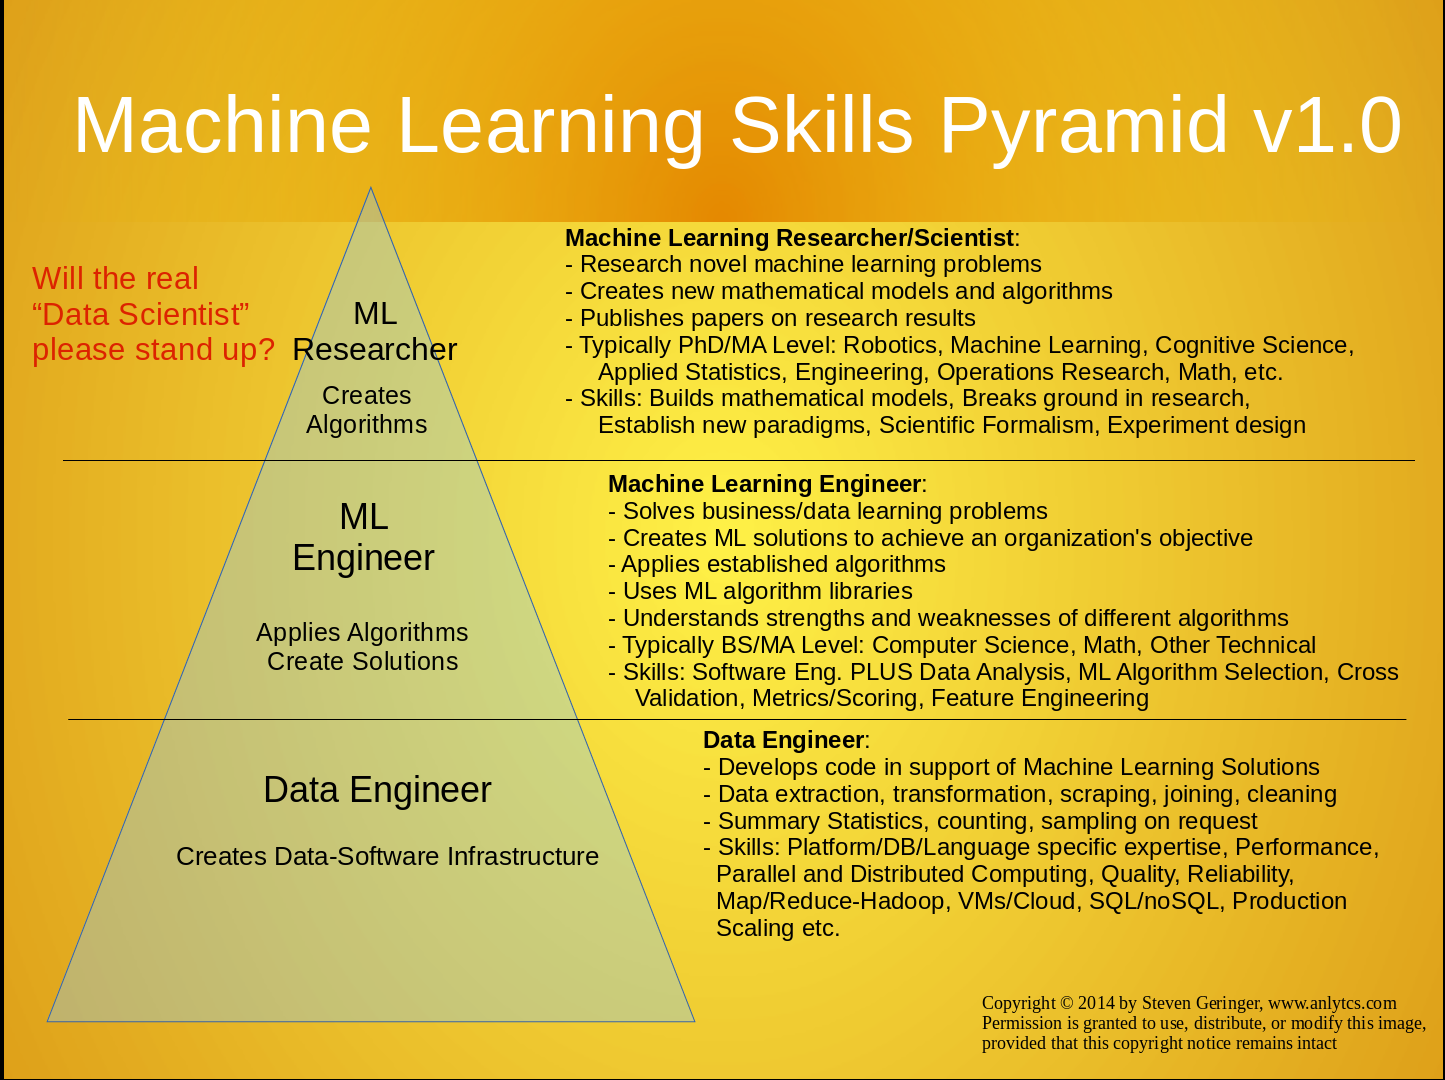 Steve's Machine Learning Blog: Machine Learning Skills 